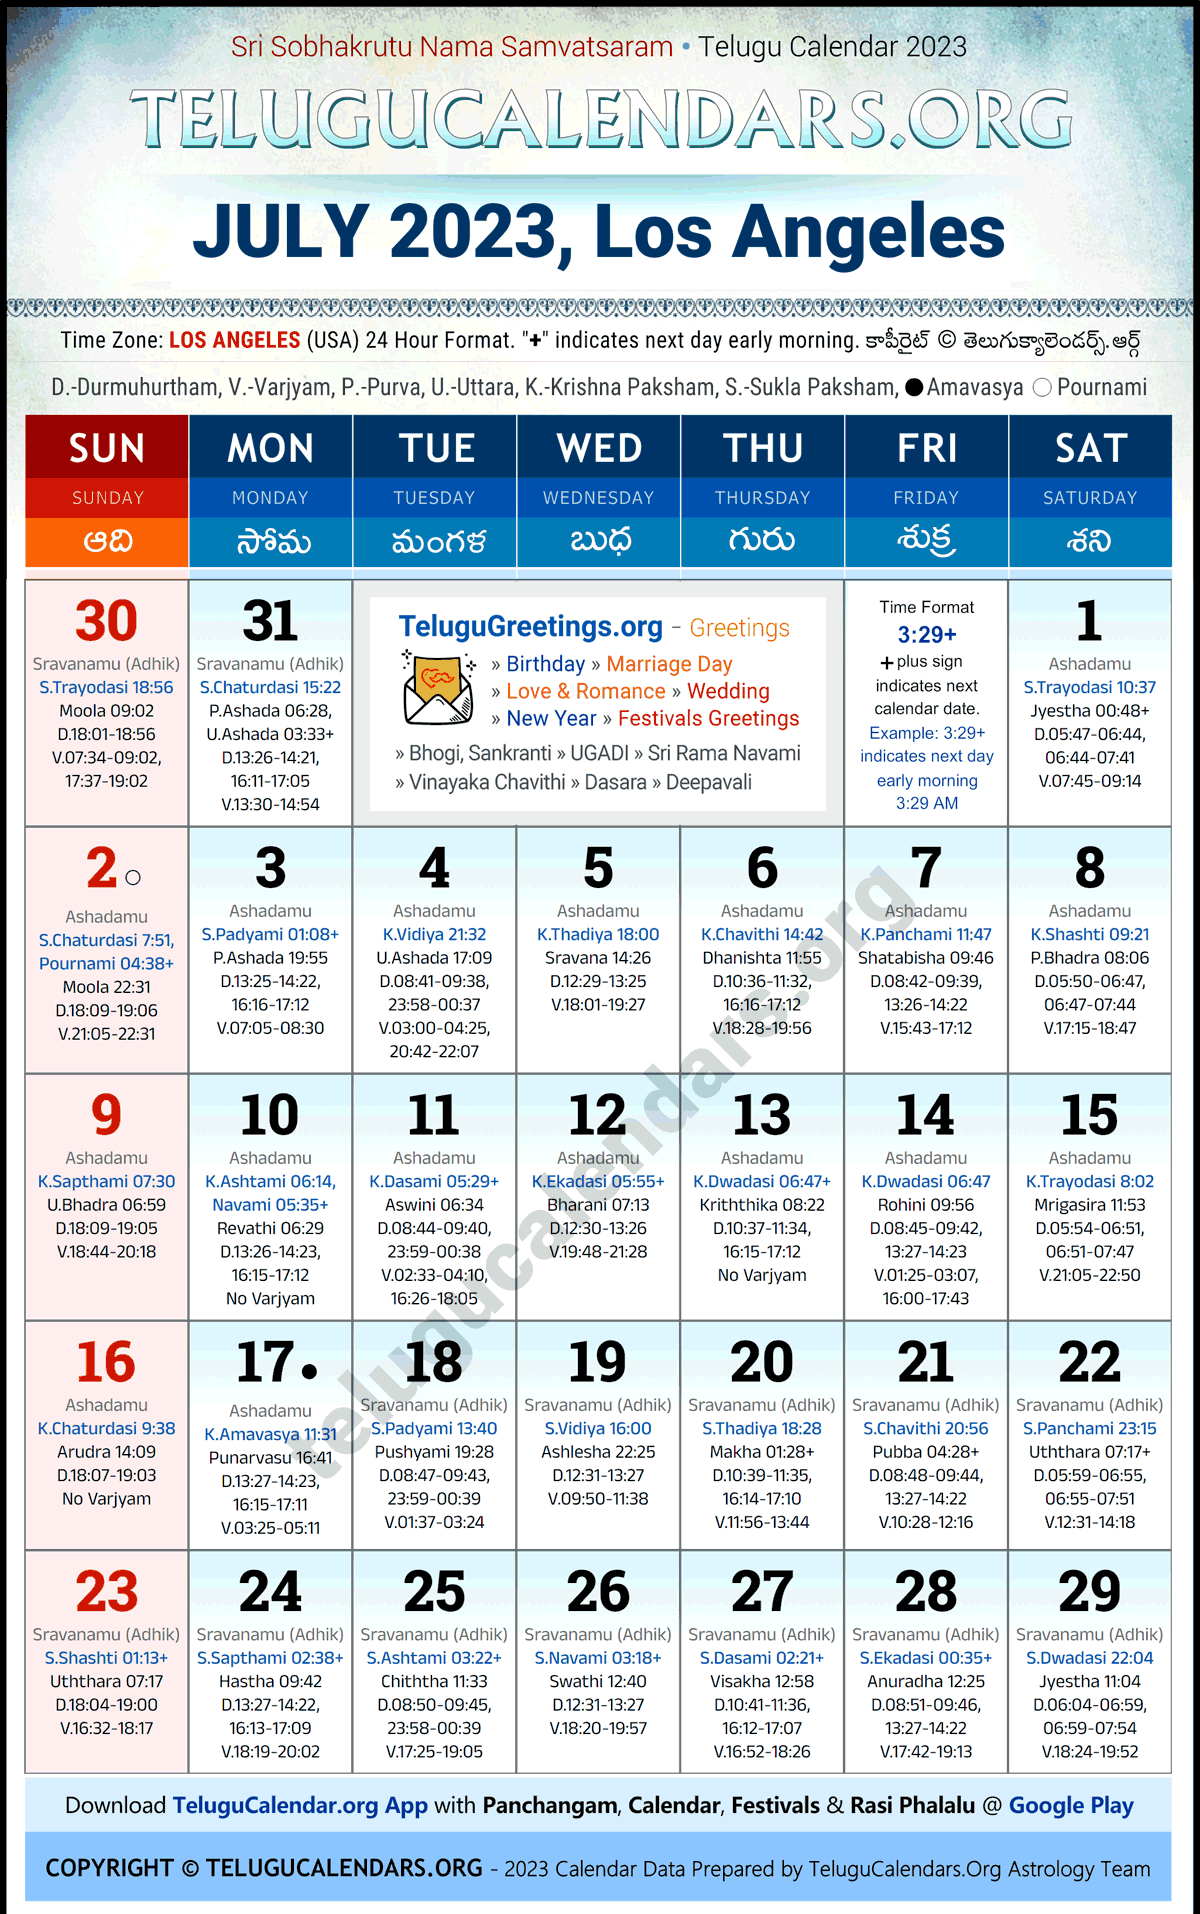 Telugu Calendar 2023 July Festivals for Los Angeles